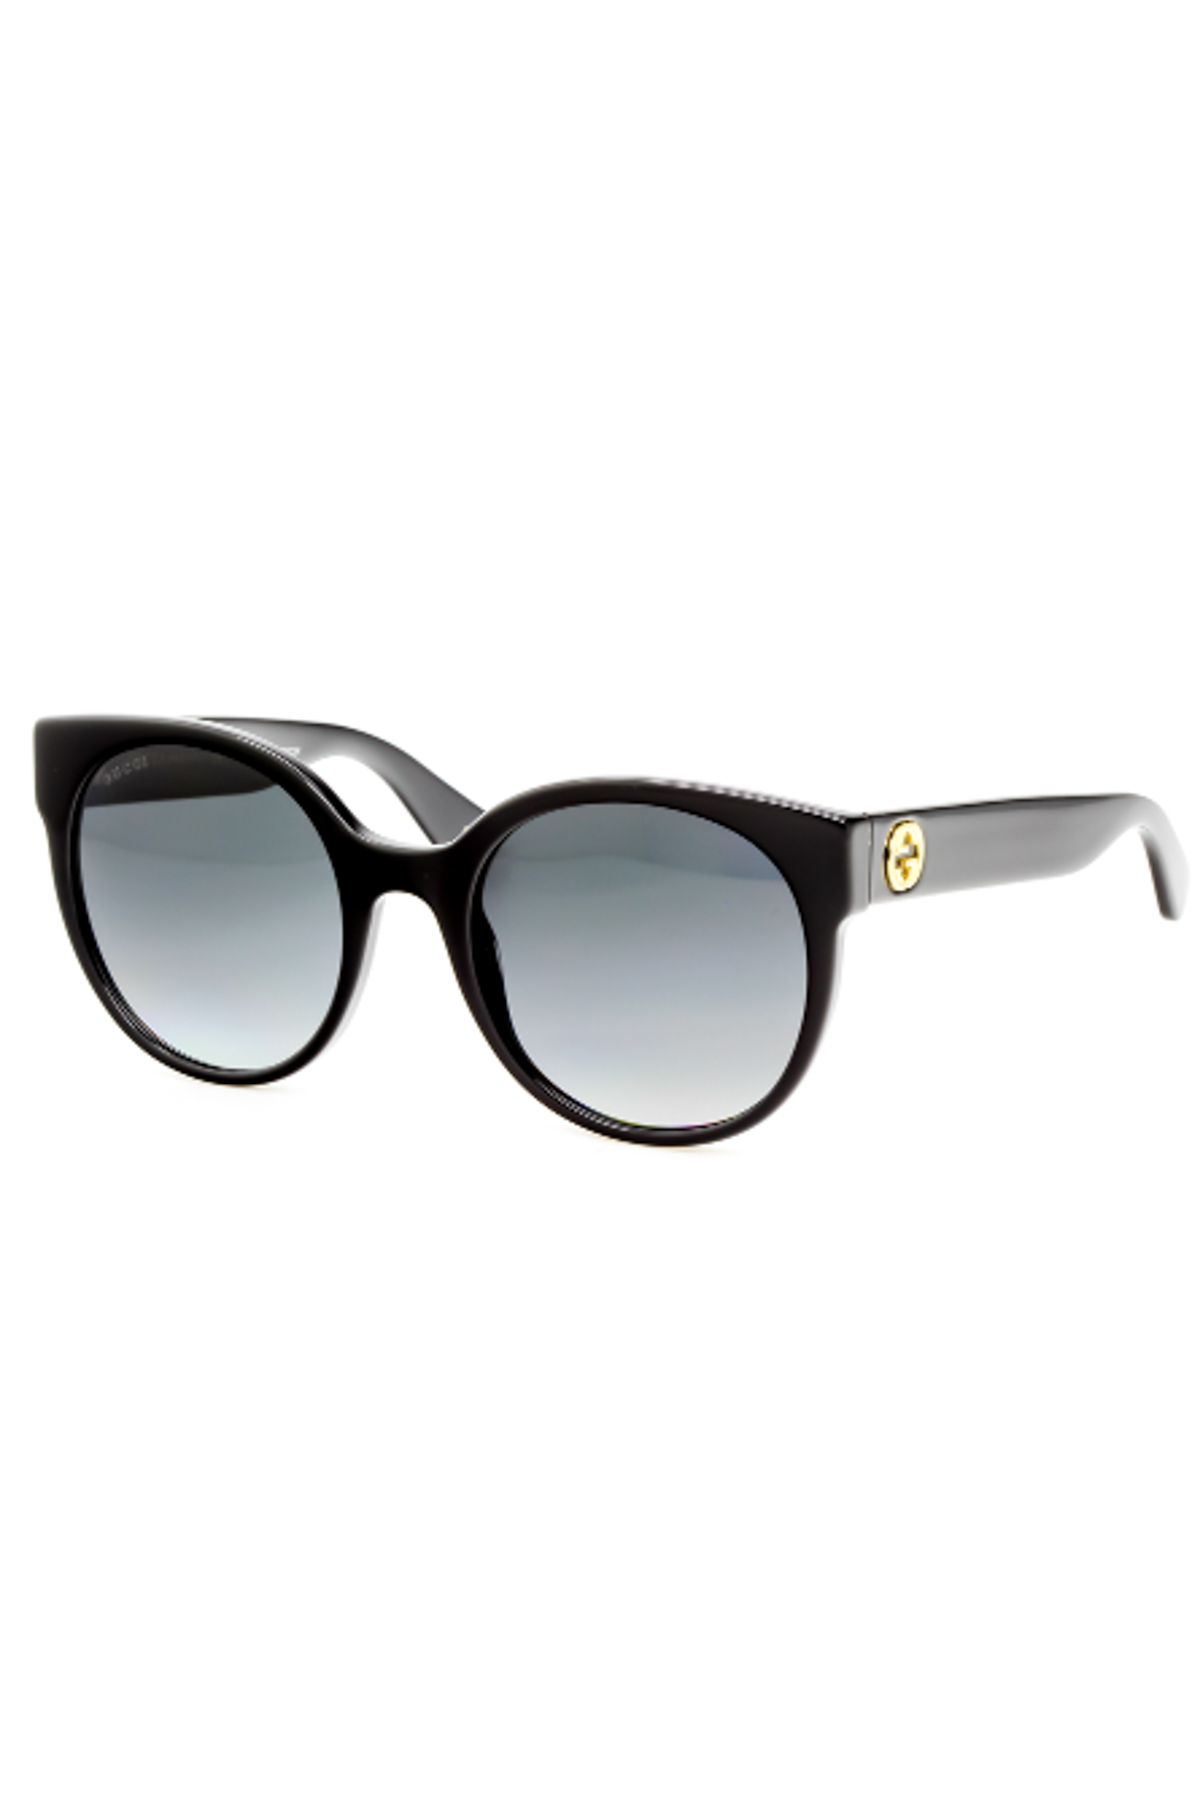 Gucci Unisex Güneş Gözlüğü GG0035S 001 54